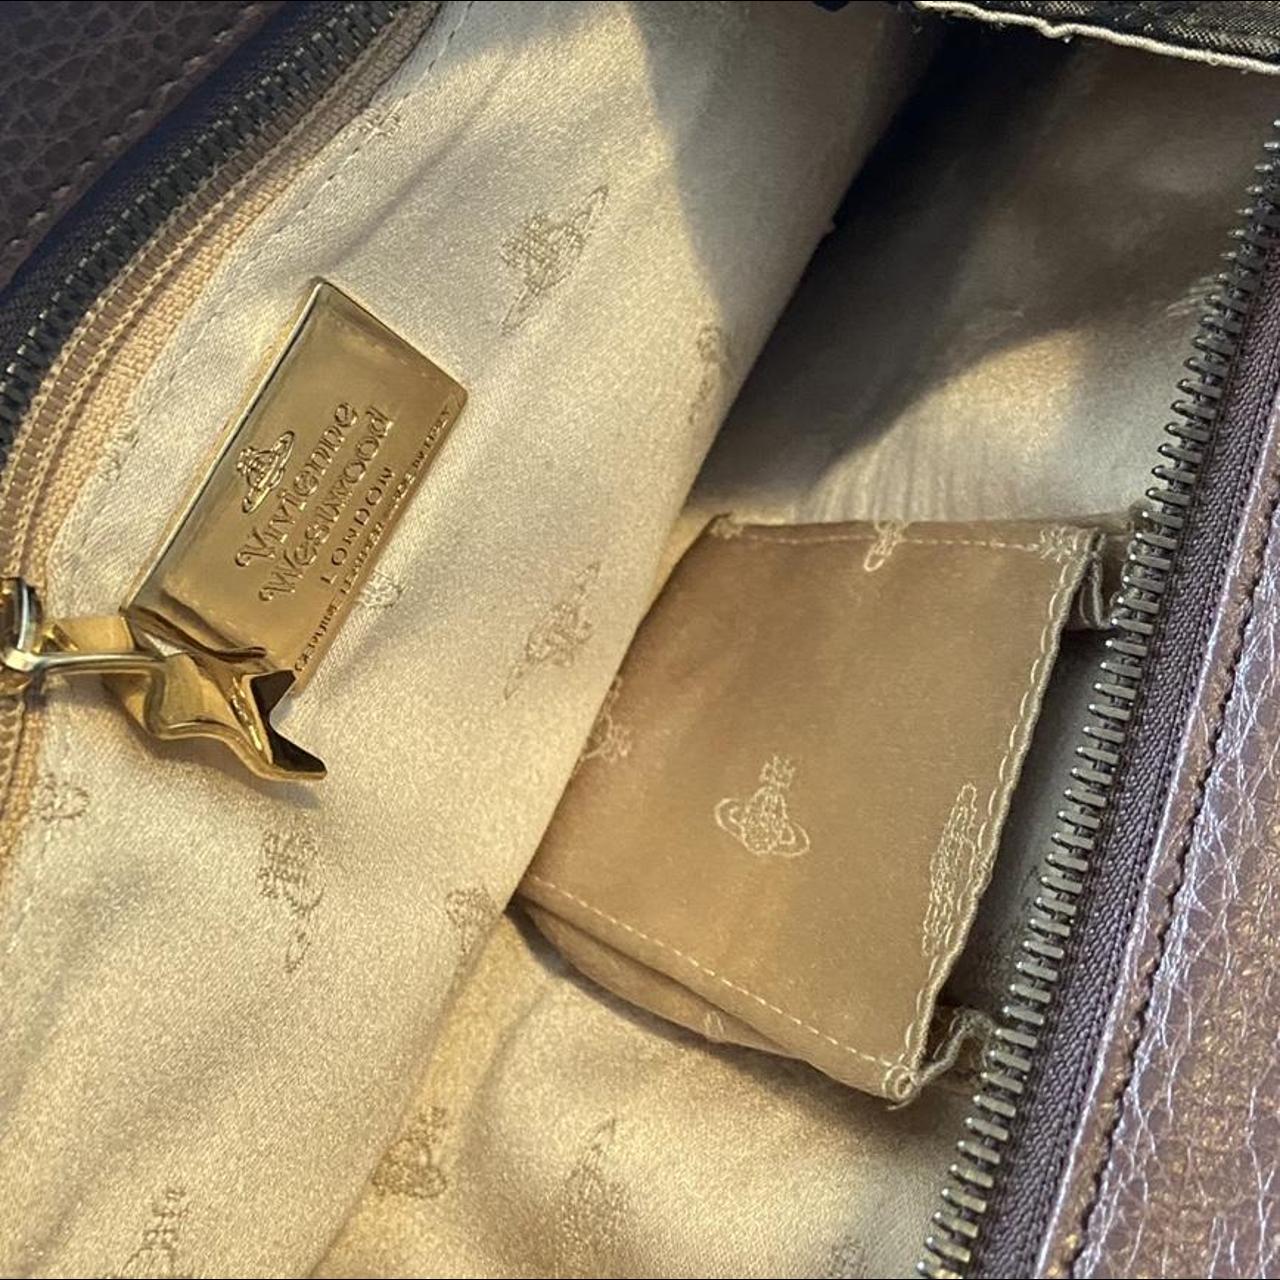 Genuine Vivienne Westwood bag, in perfect condition. - Depop